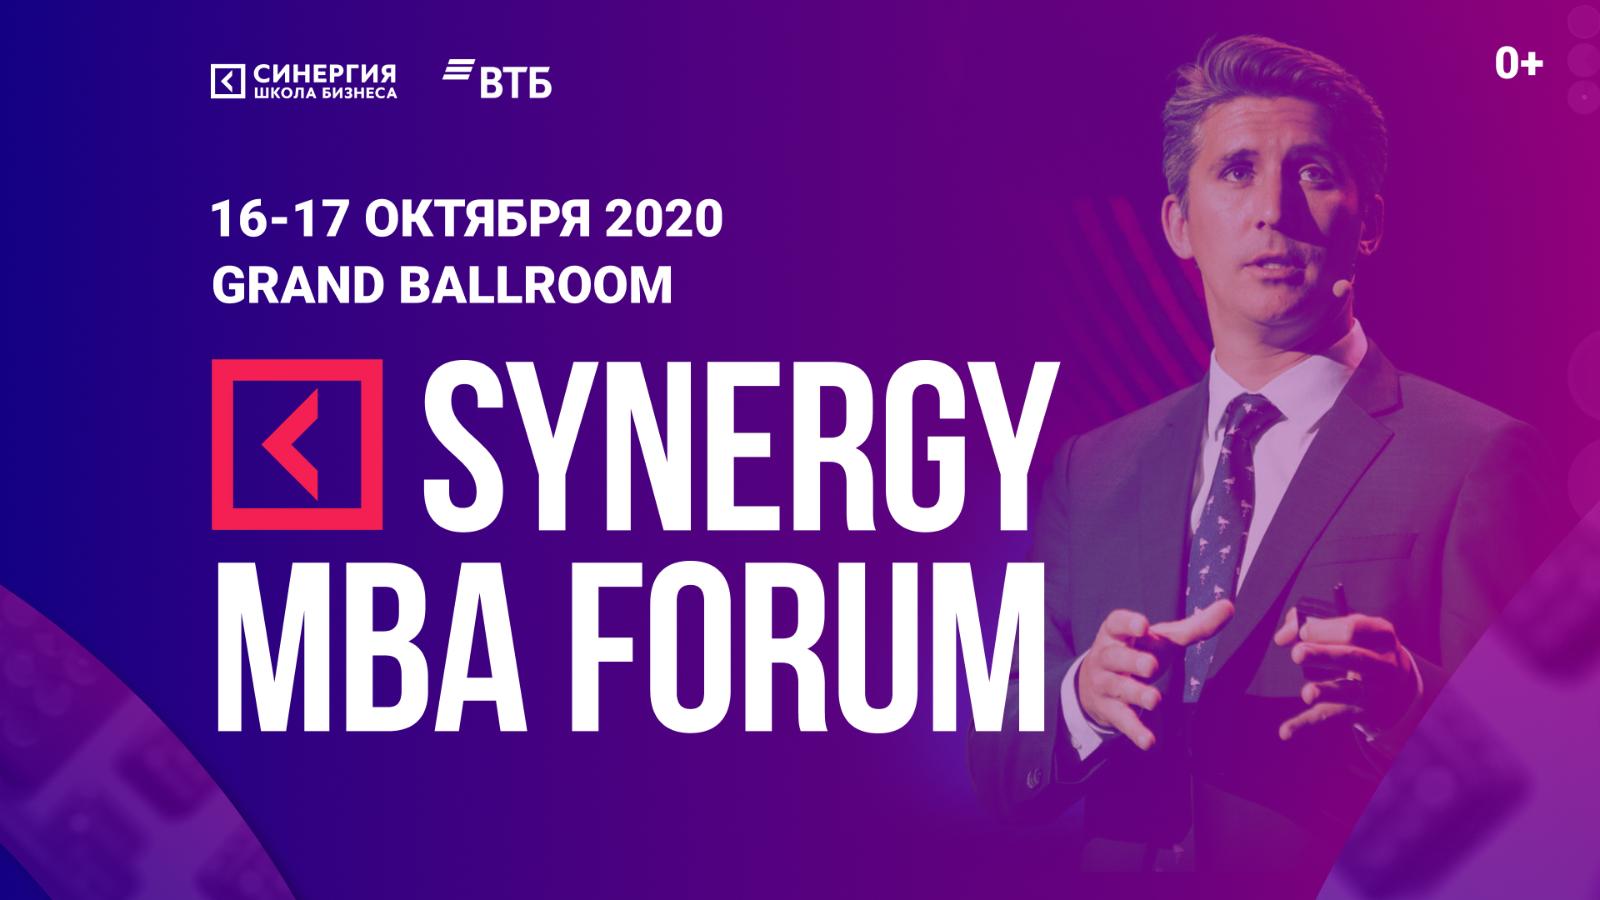 На Synergy MBA Forum перезагрузят традиционную парадигму бизнеса